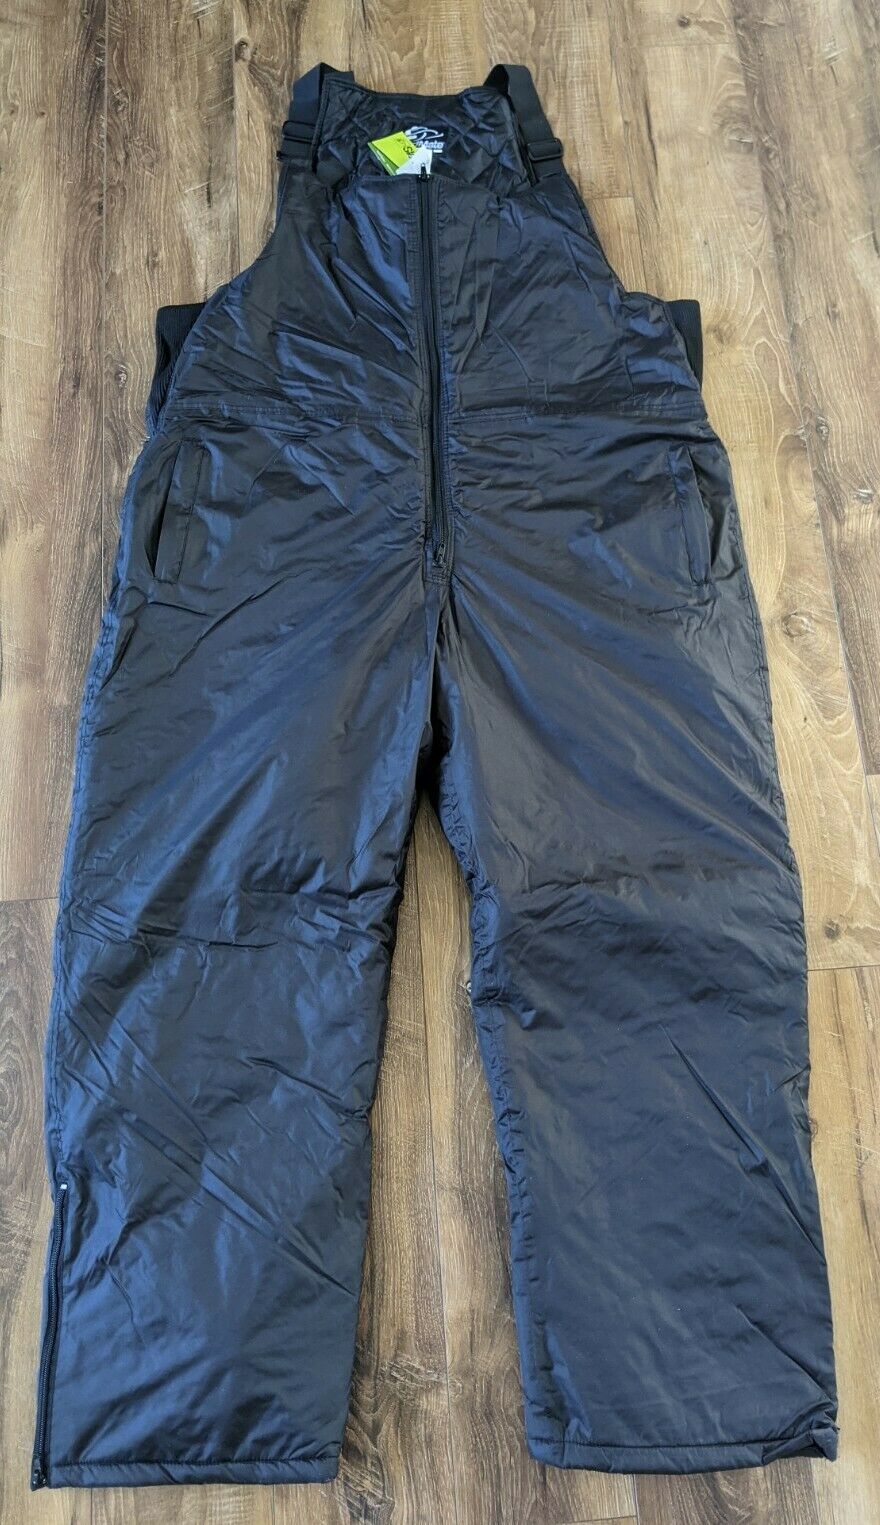 Nwt Sledmate Black Bib Snowsuit Overalls Size Xl C-2